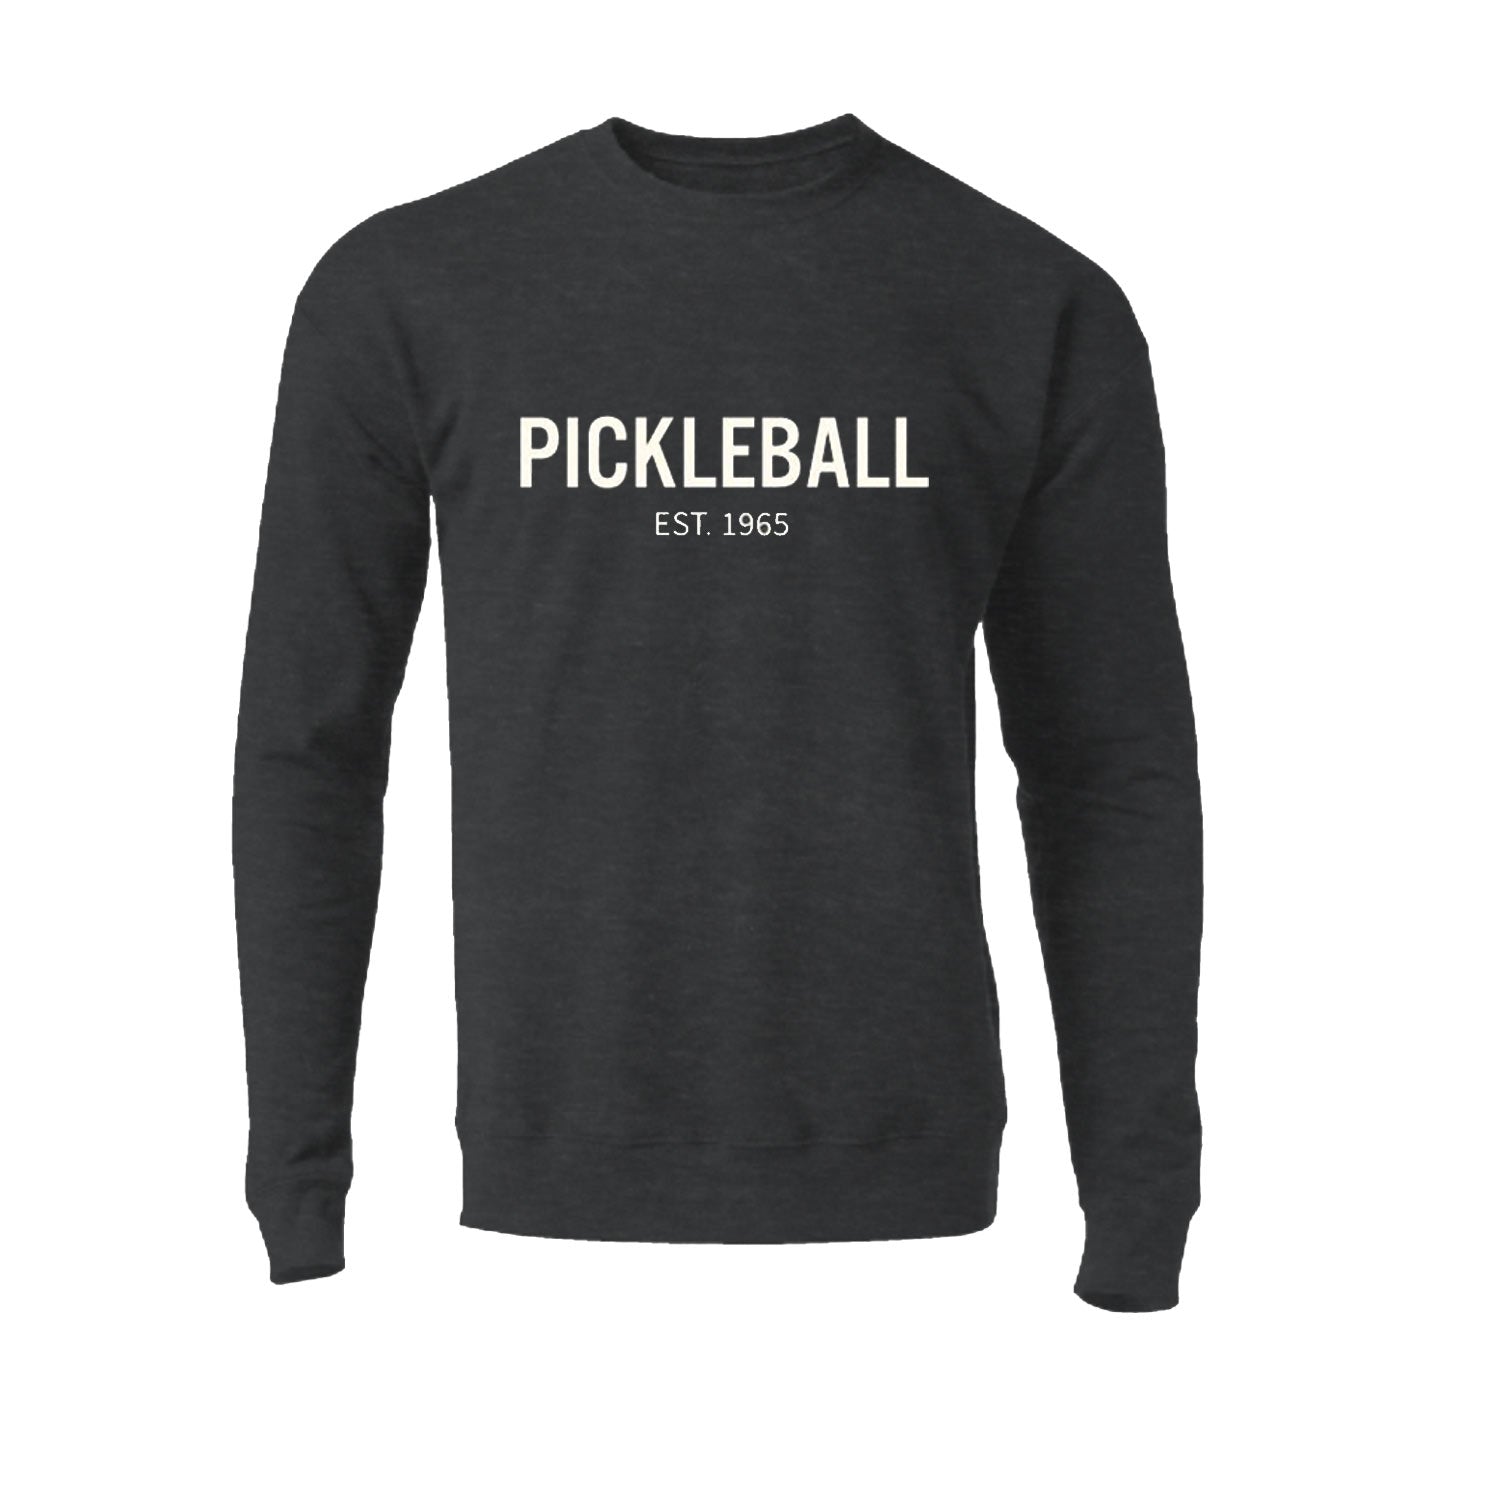 Best Pickleball Apparel - Super Soft Pickleball Crewneck